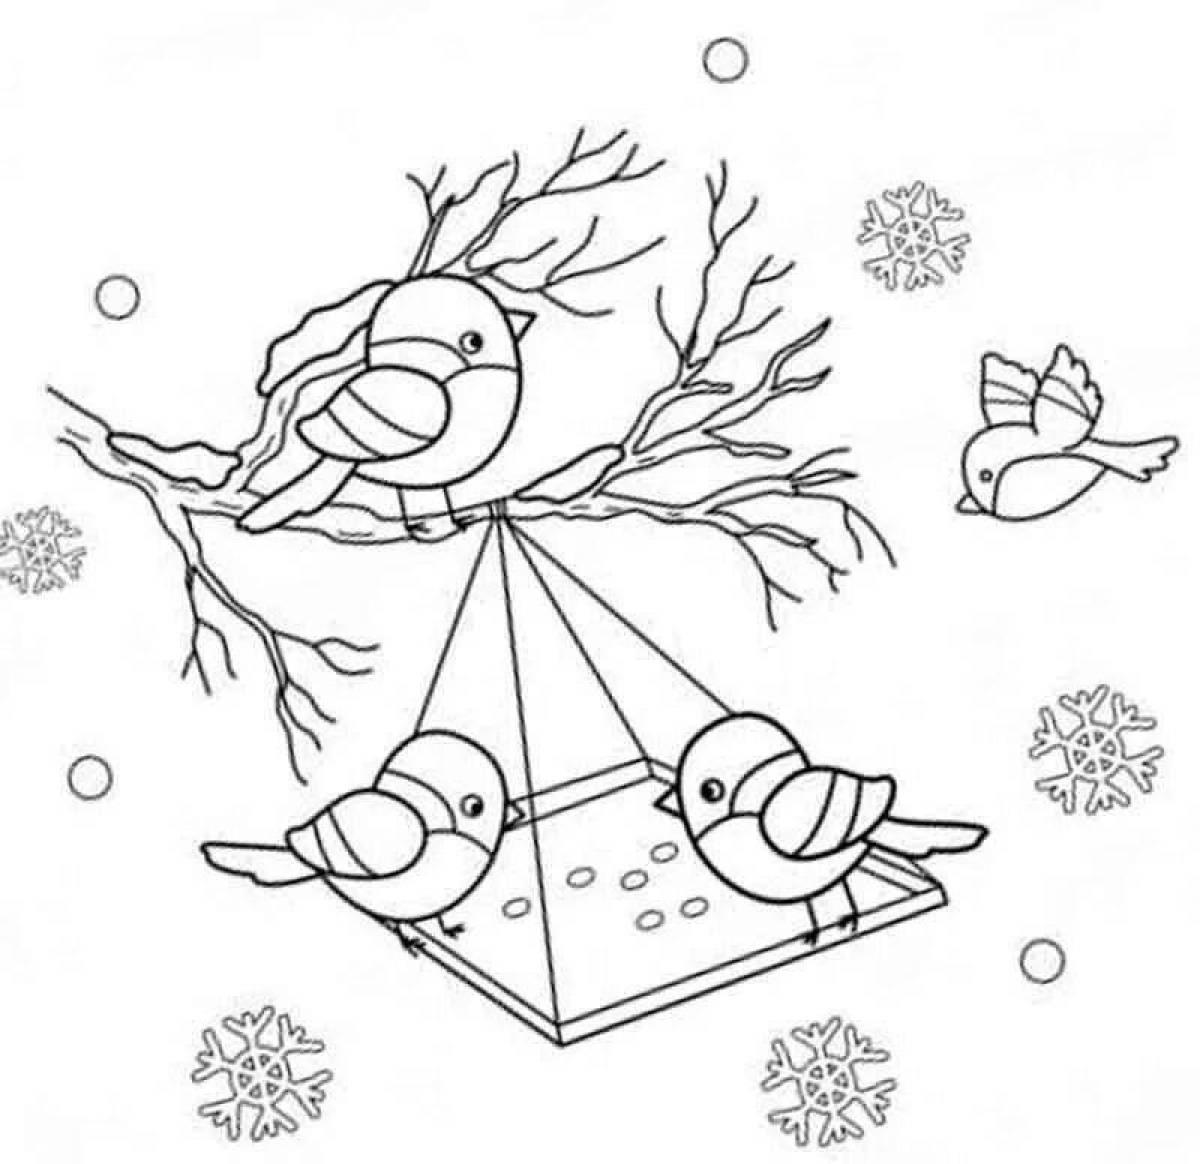 Зимующие птицы | Coloring books, Coloring book pages, Coloring pages